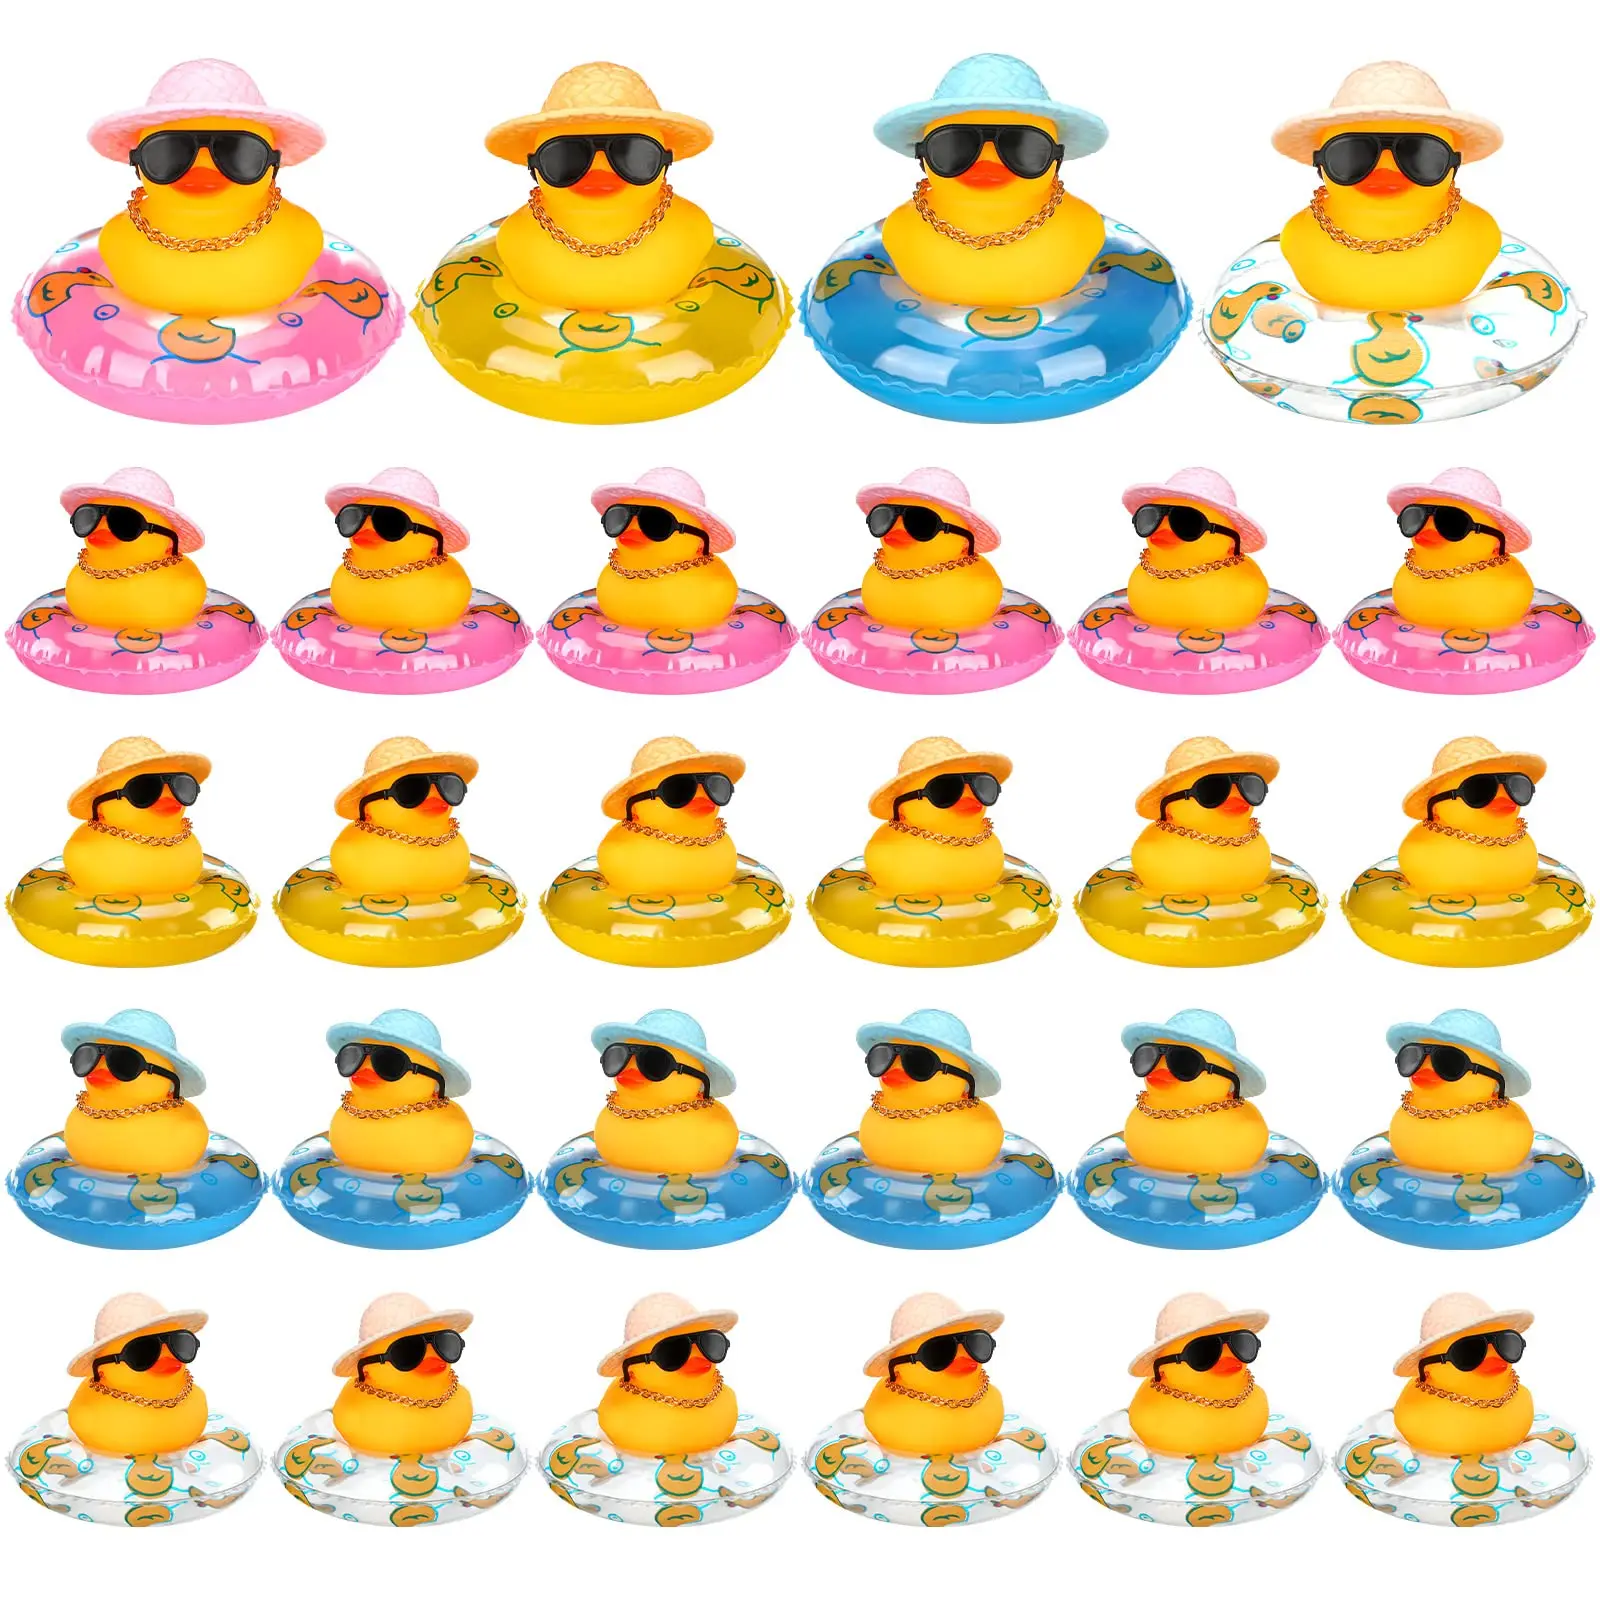 

24/36PC Mini Rubber Ducks Summer Beach Funny Rubber Ducky Bathtub Shower Ducks Toys for Baby Shower Swimming Pool Toys (24 Pcs)